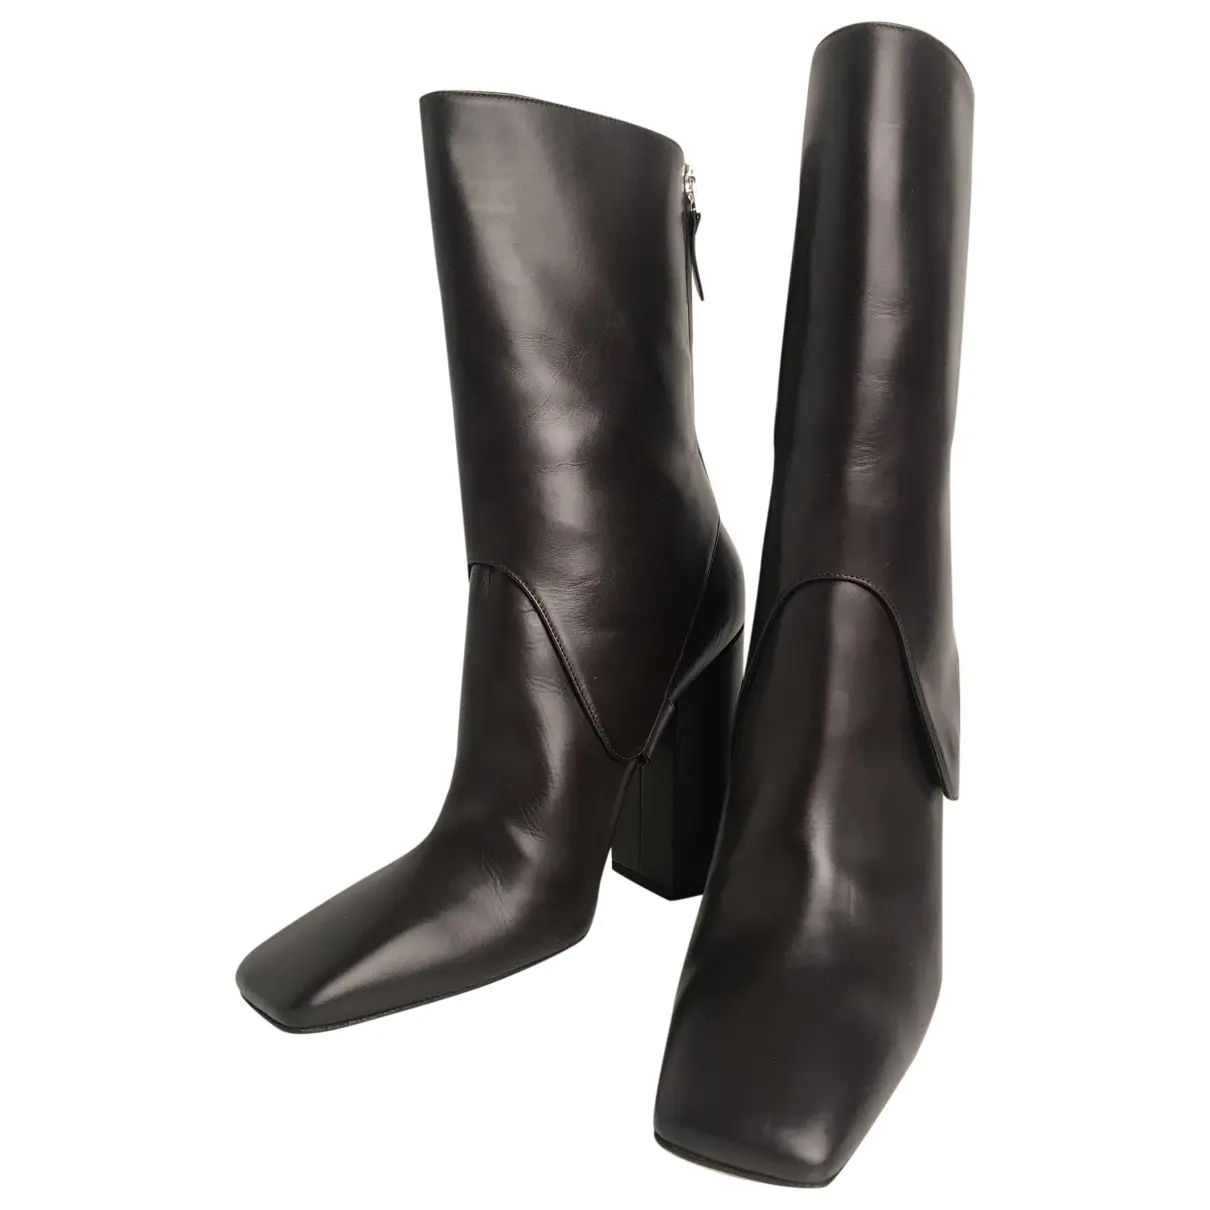 Leather boots Victoria Beckham